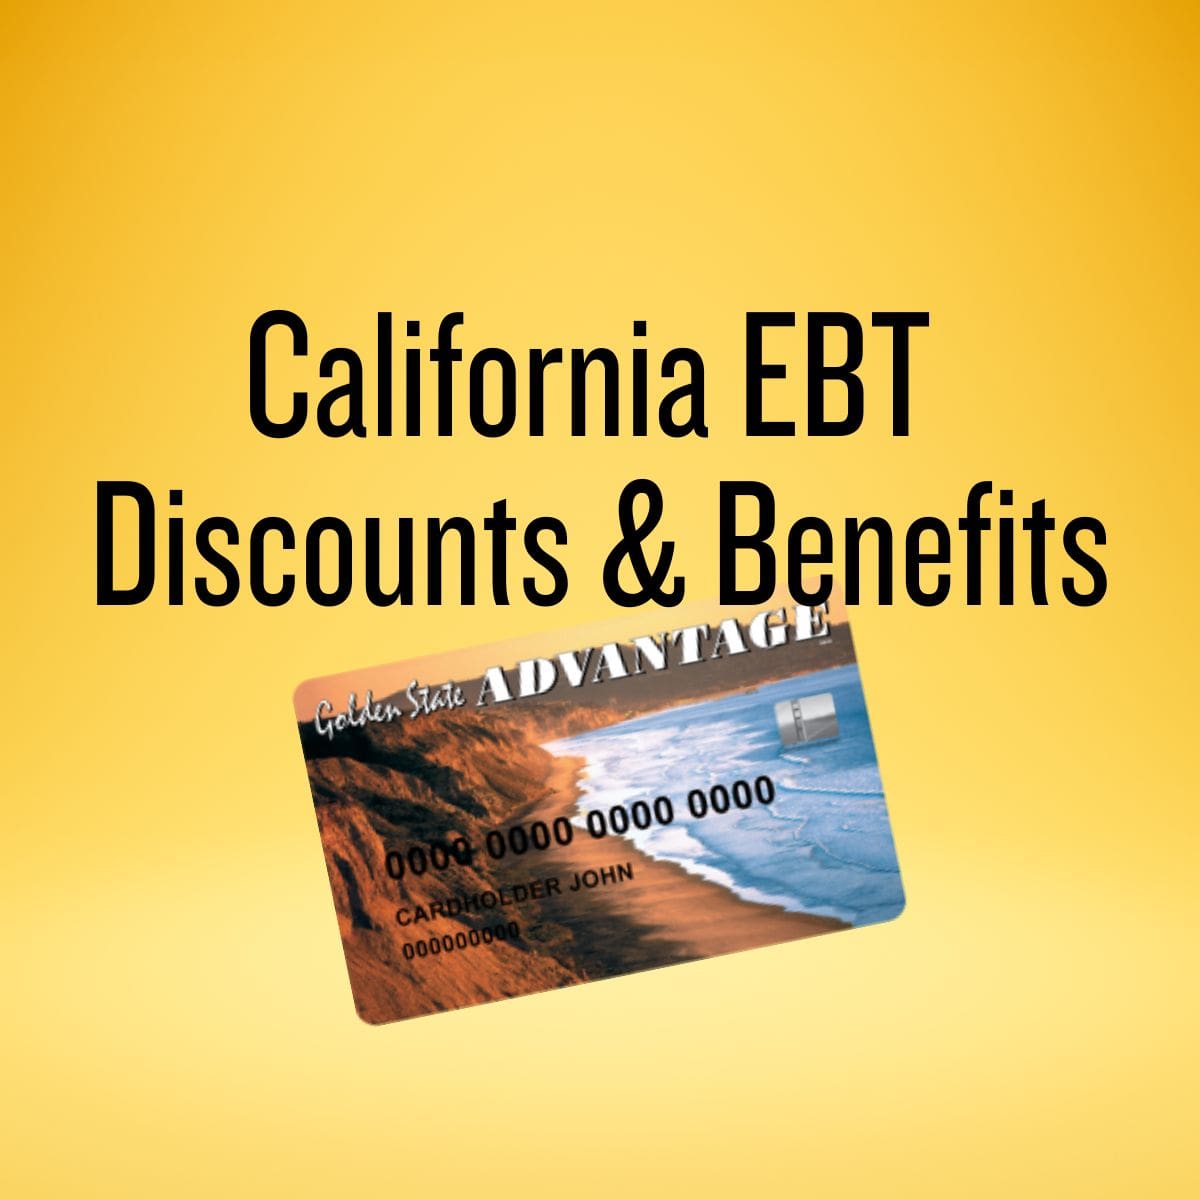 California EBT Discounts & Benefits